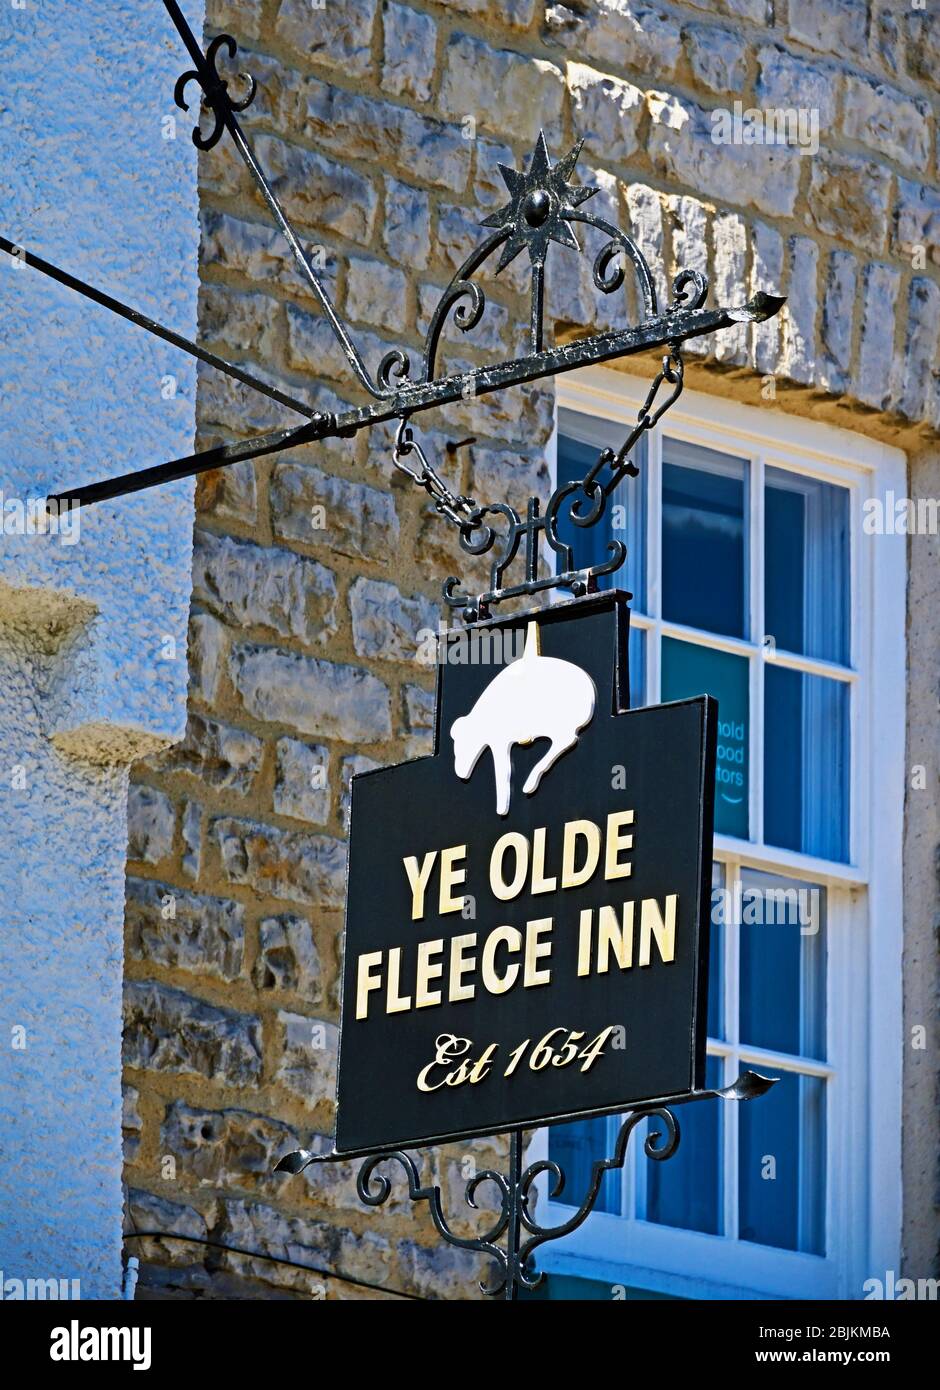 Inn sign. Ye Olde Fleece Inn, Est 1654. Highgate, Kendal, Cumbria, England, United Kingdom, Europe. Stock Photo